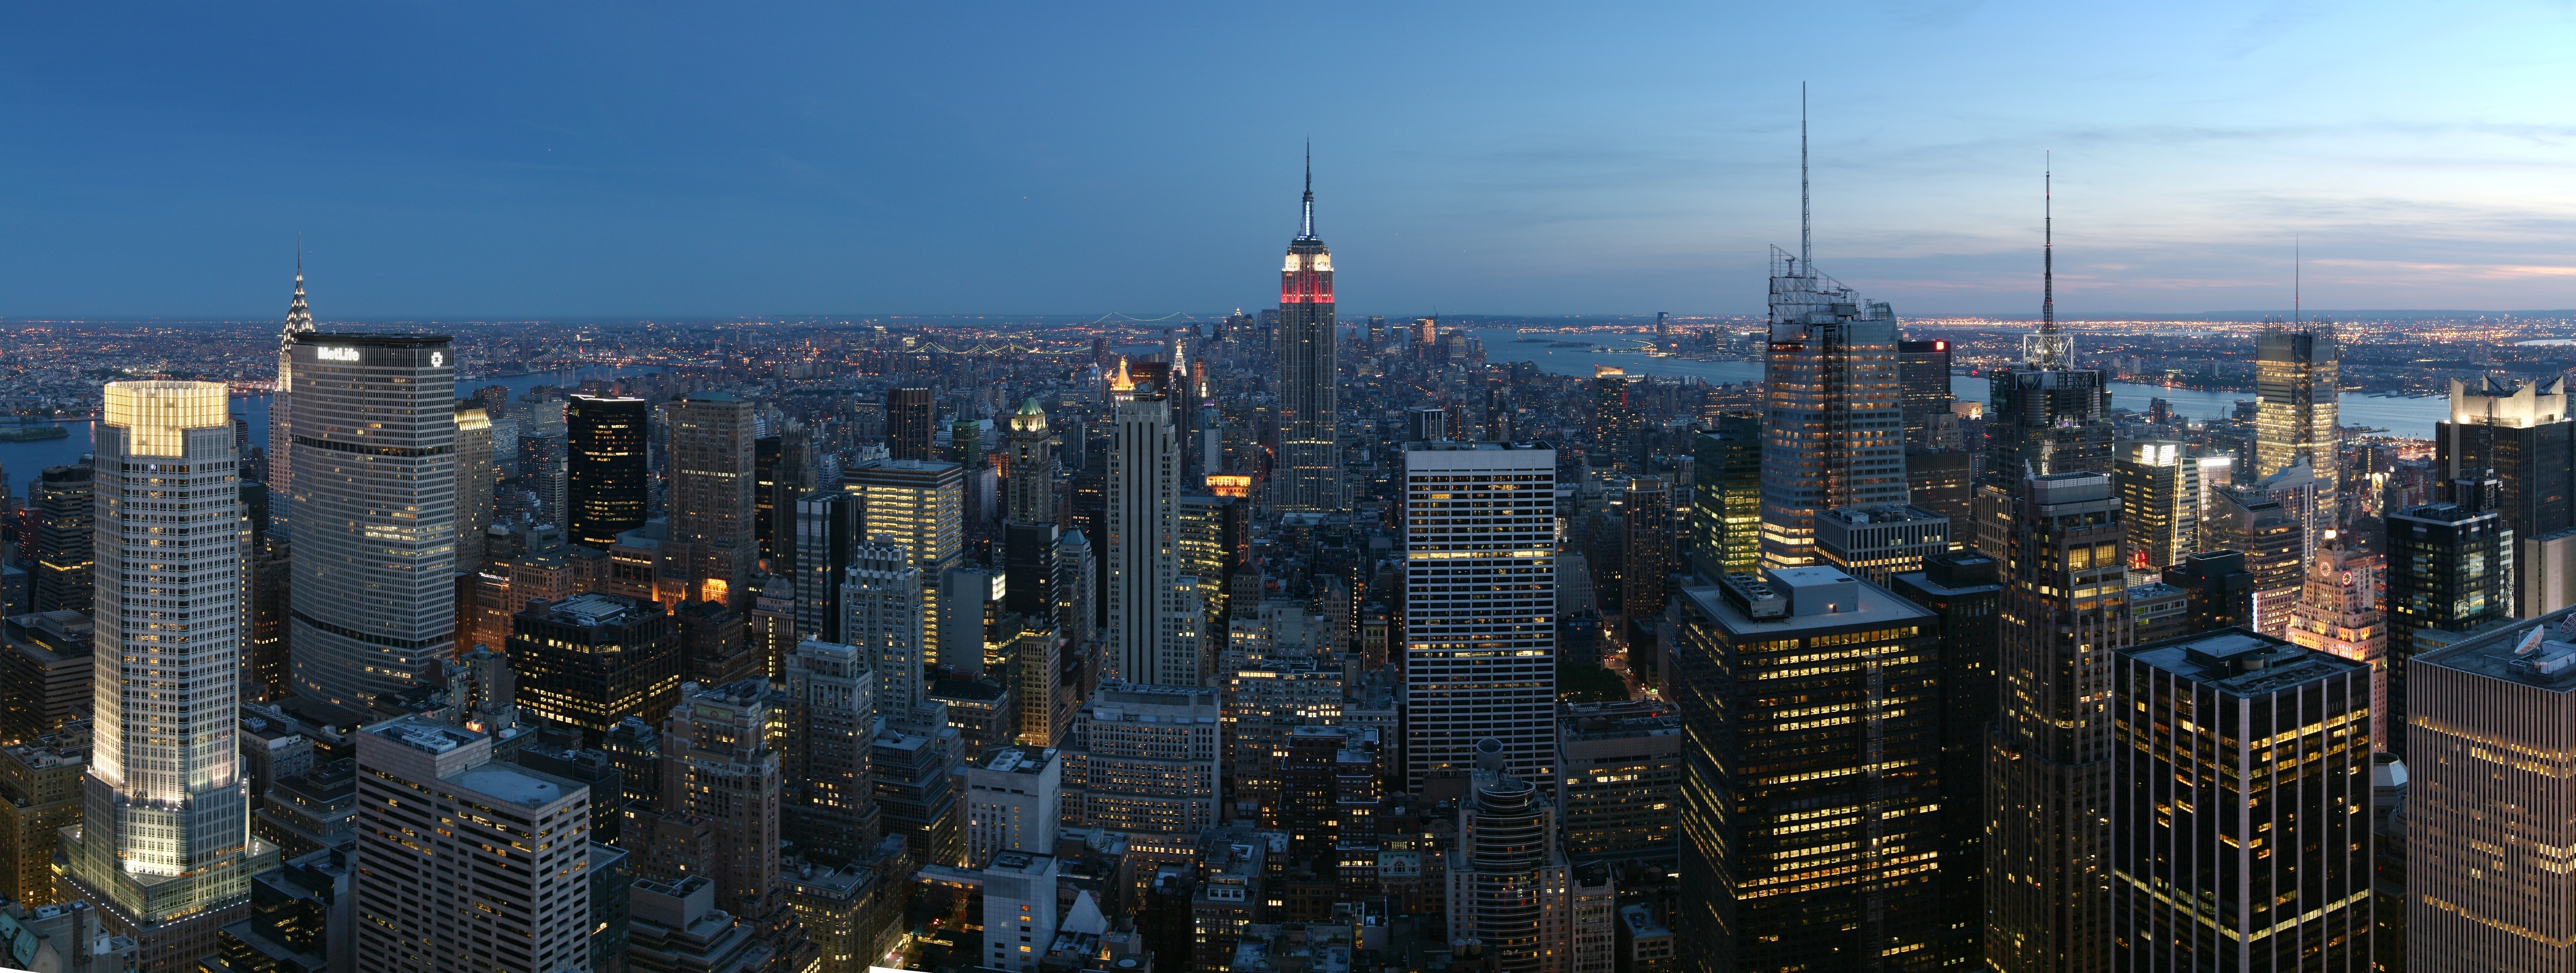 4k Wallpaper New York City Empire State Building Desktop